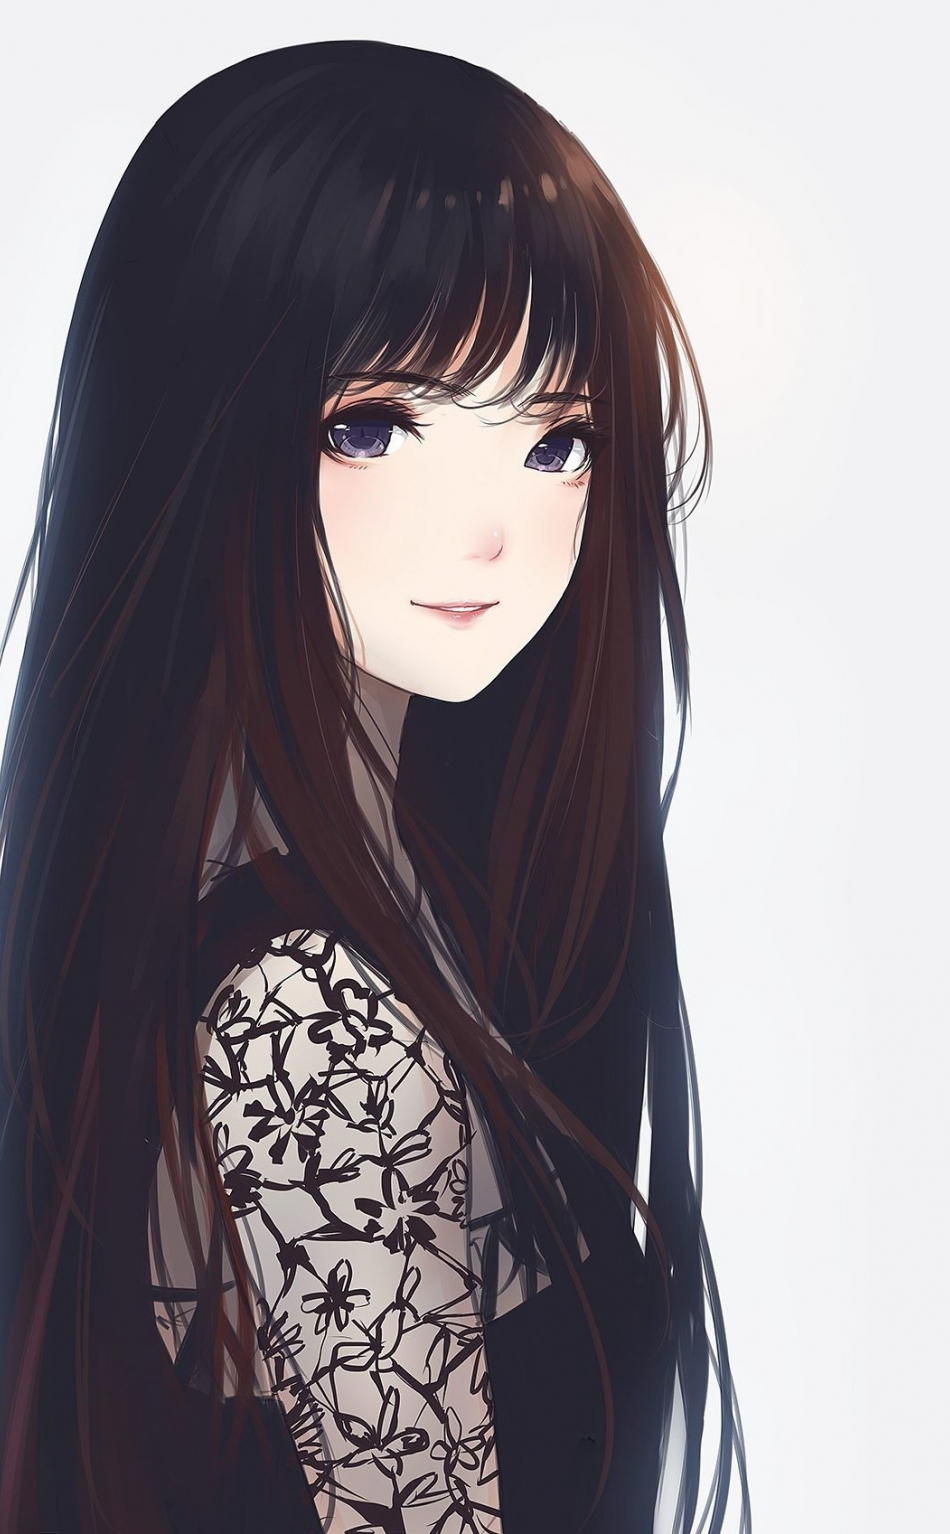 Download wallpaper 950x1534 cute, long hair, blue eyes, anime girl,  original, artwork, iphone, 950x1534 hd background, 15384